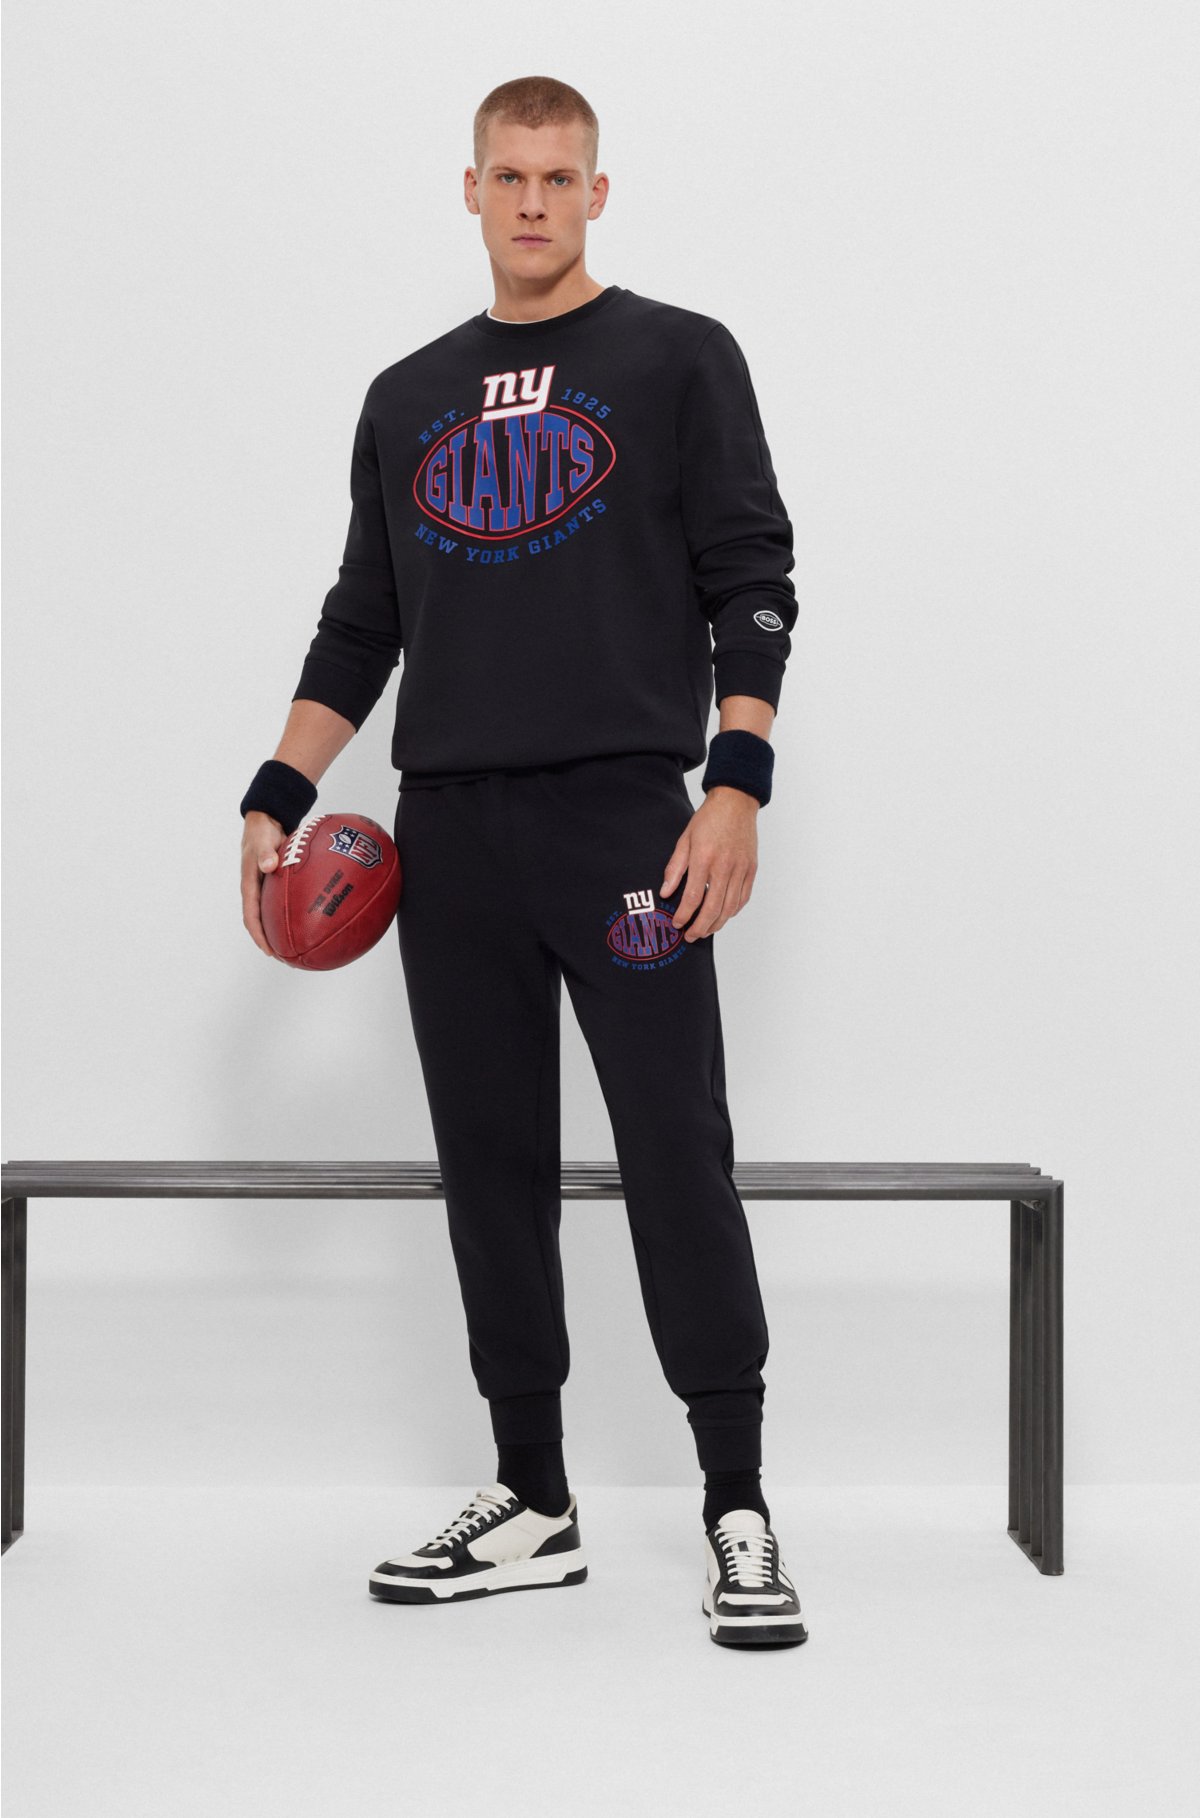 BOSS x NFL cotton-blend sweatshirt with collaborative branding, Giants